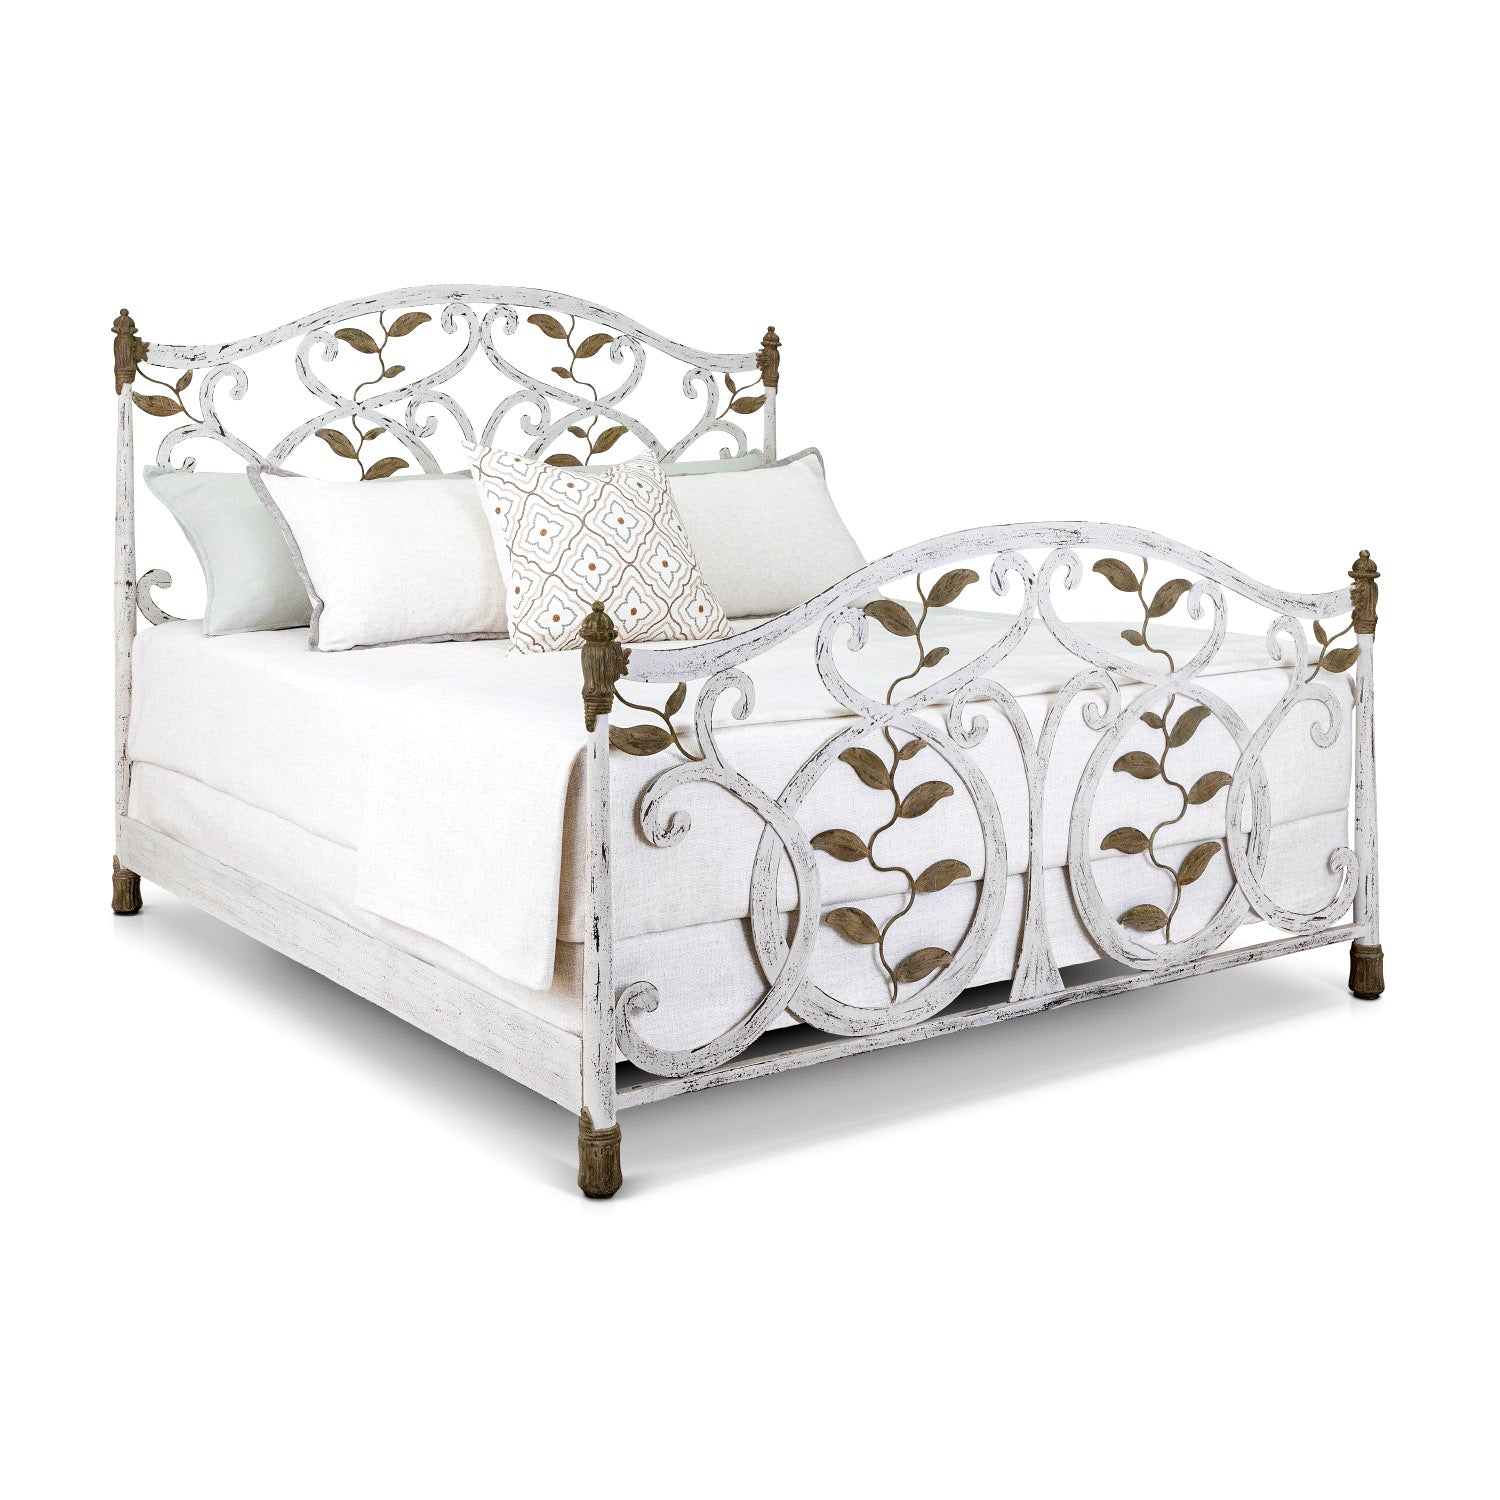 Laurel Cast Bed